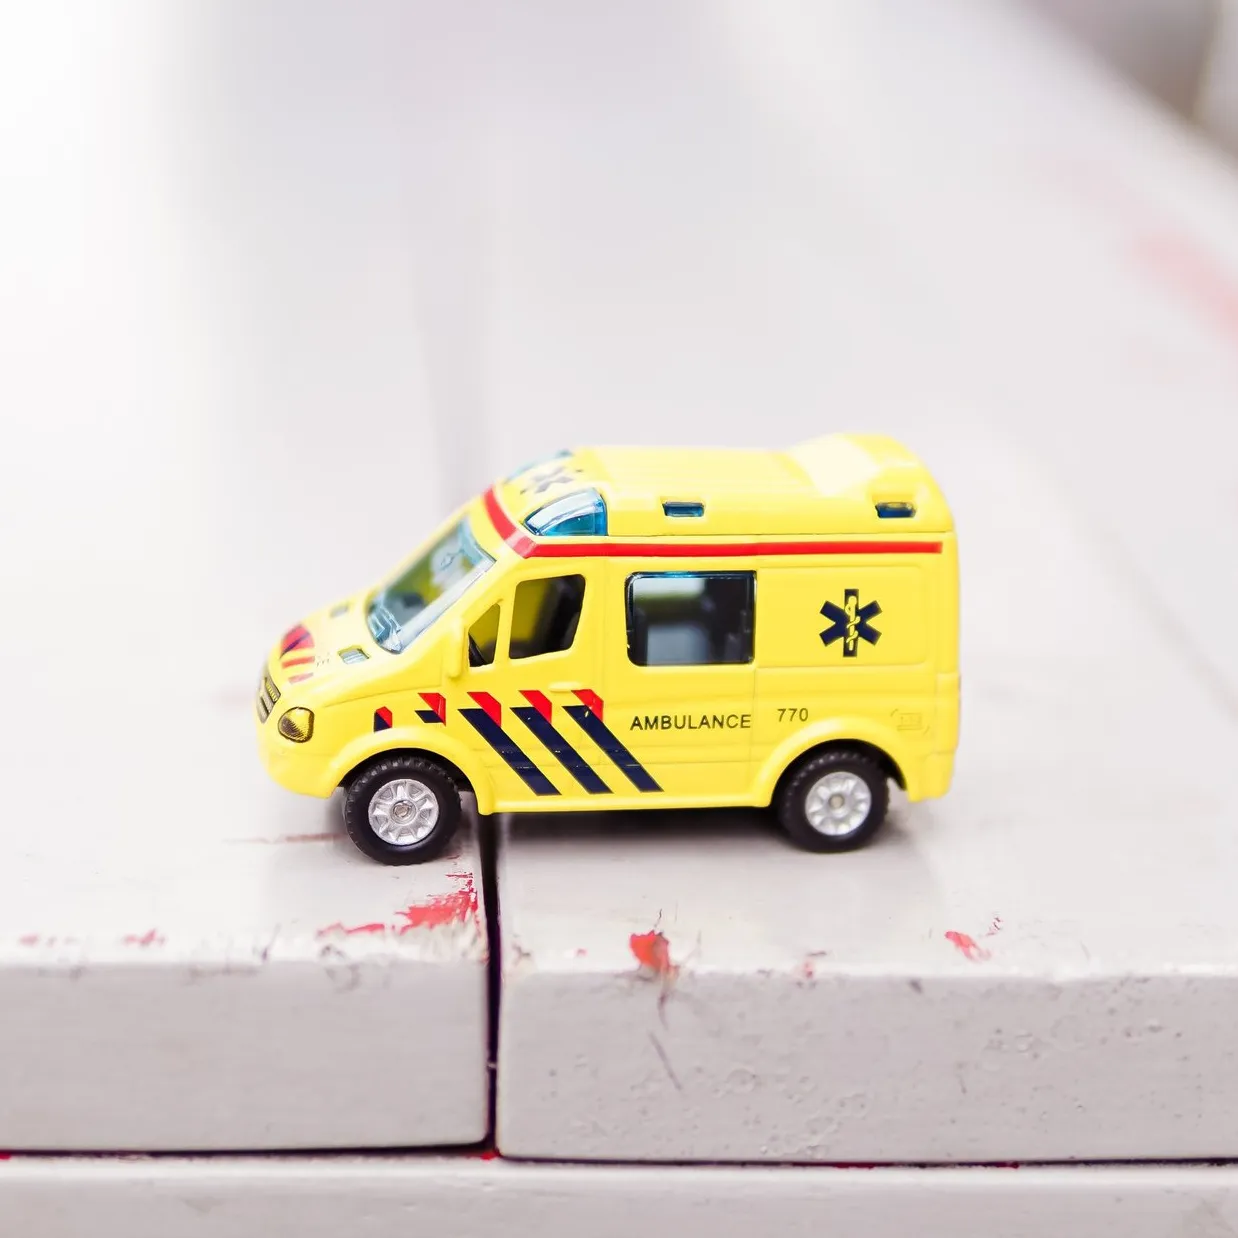 Ambulance indicating help with personal injury